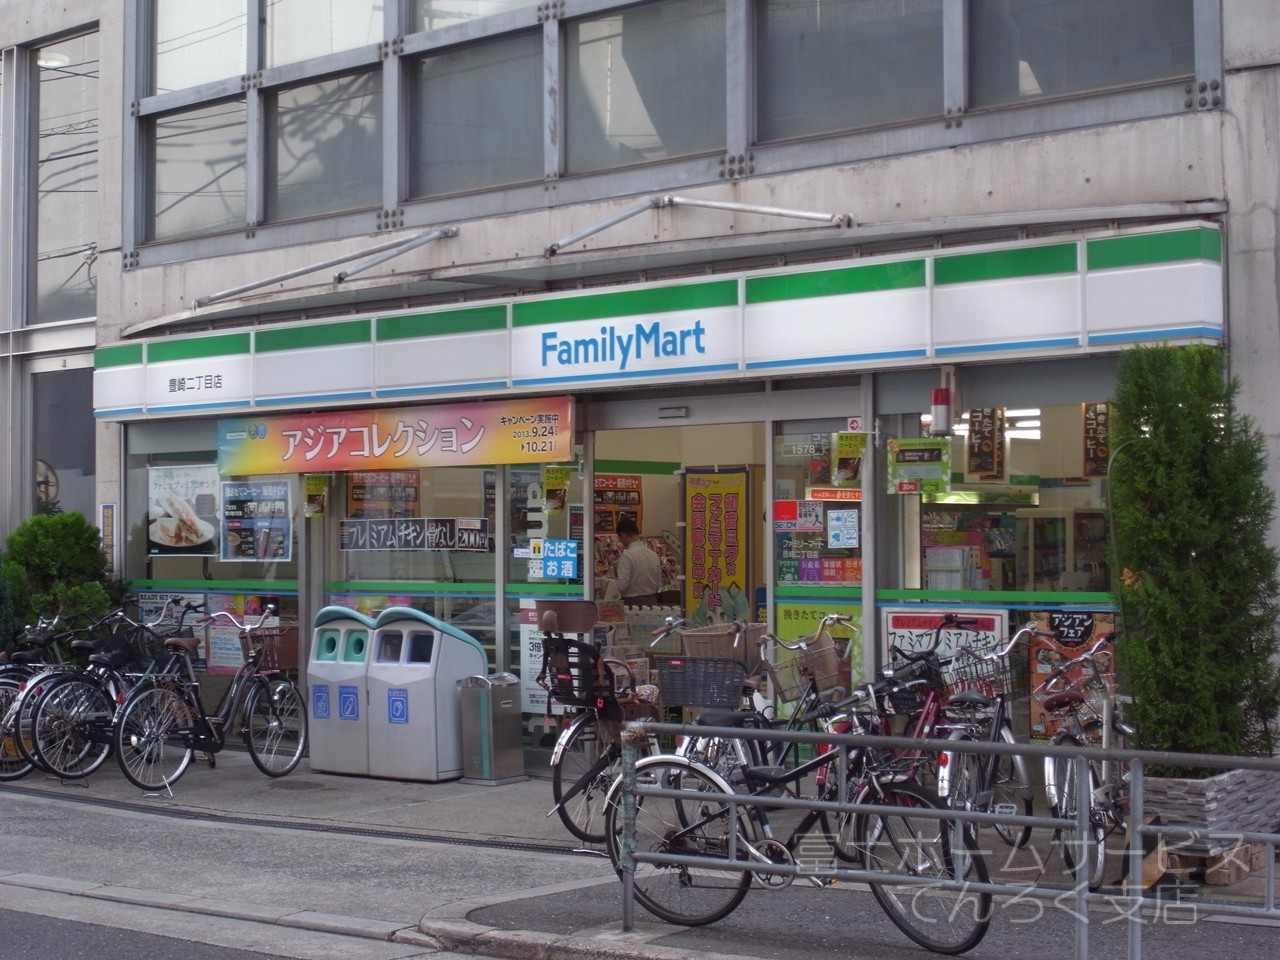 Convenience store. FamilyMart Toyosaki-chome store up (convenience store) 366m